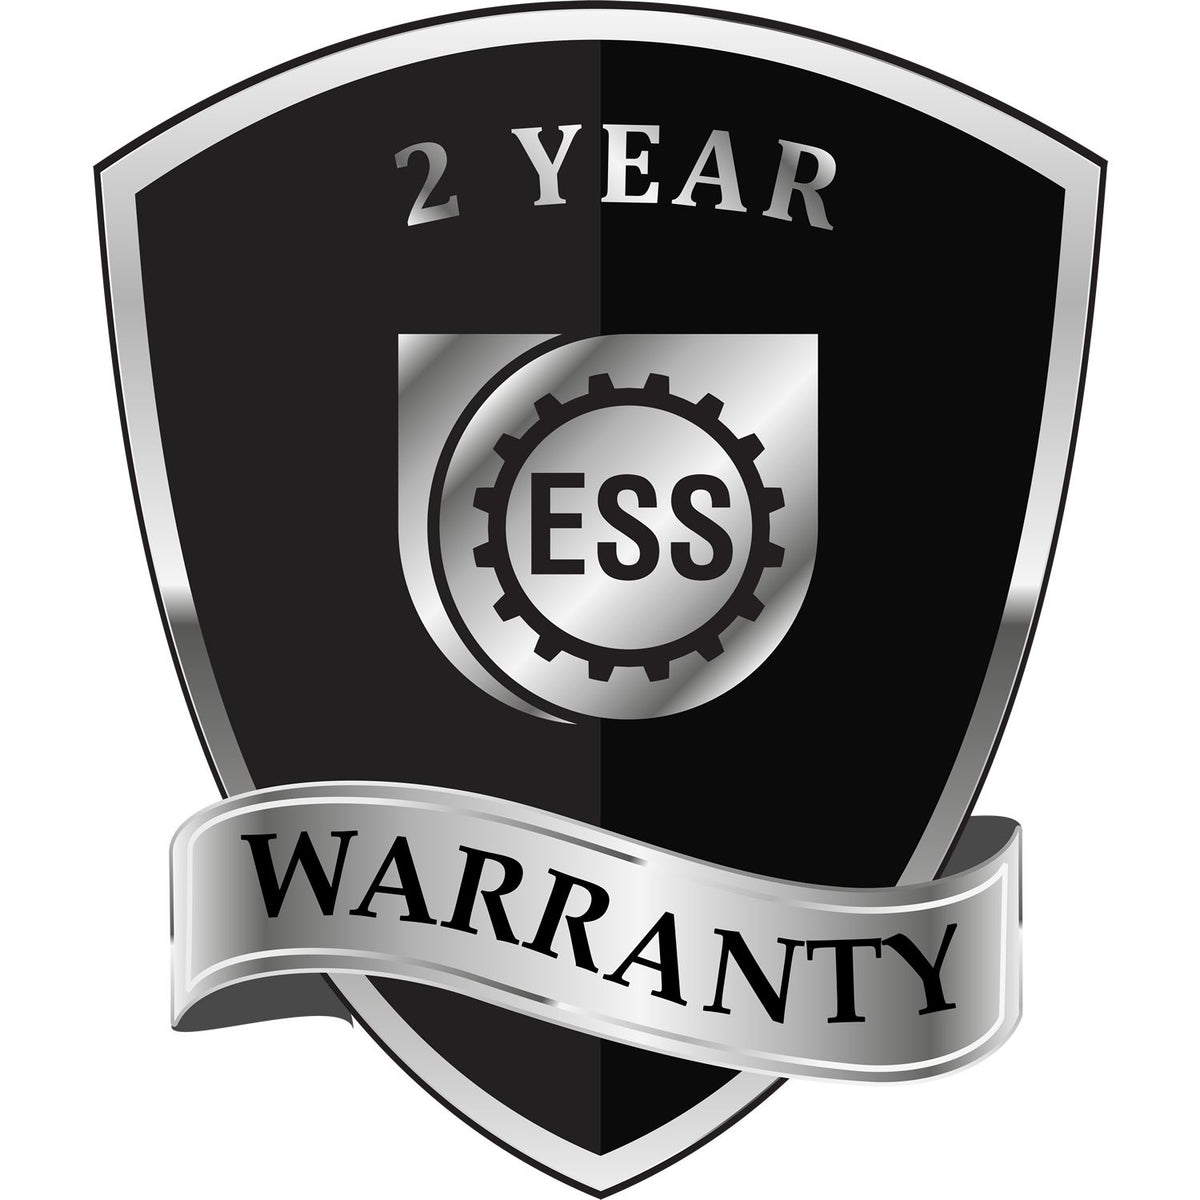 A black and silver badge or emblem showing warranty information for the Hybrid Colorado Land Surveyor Seal